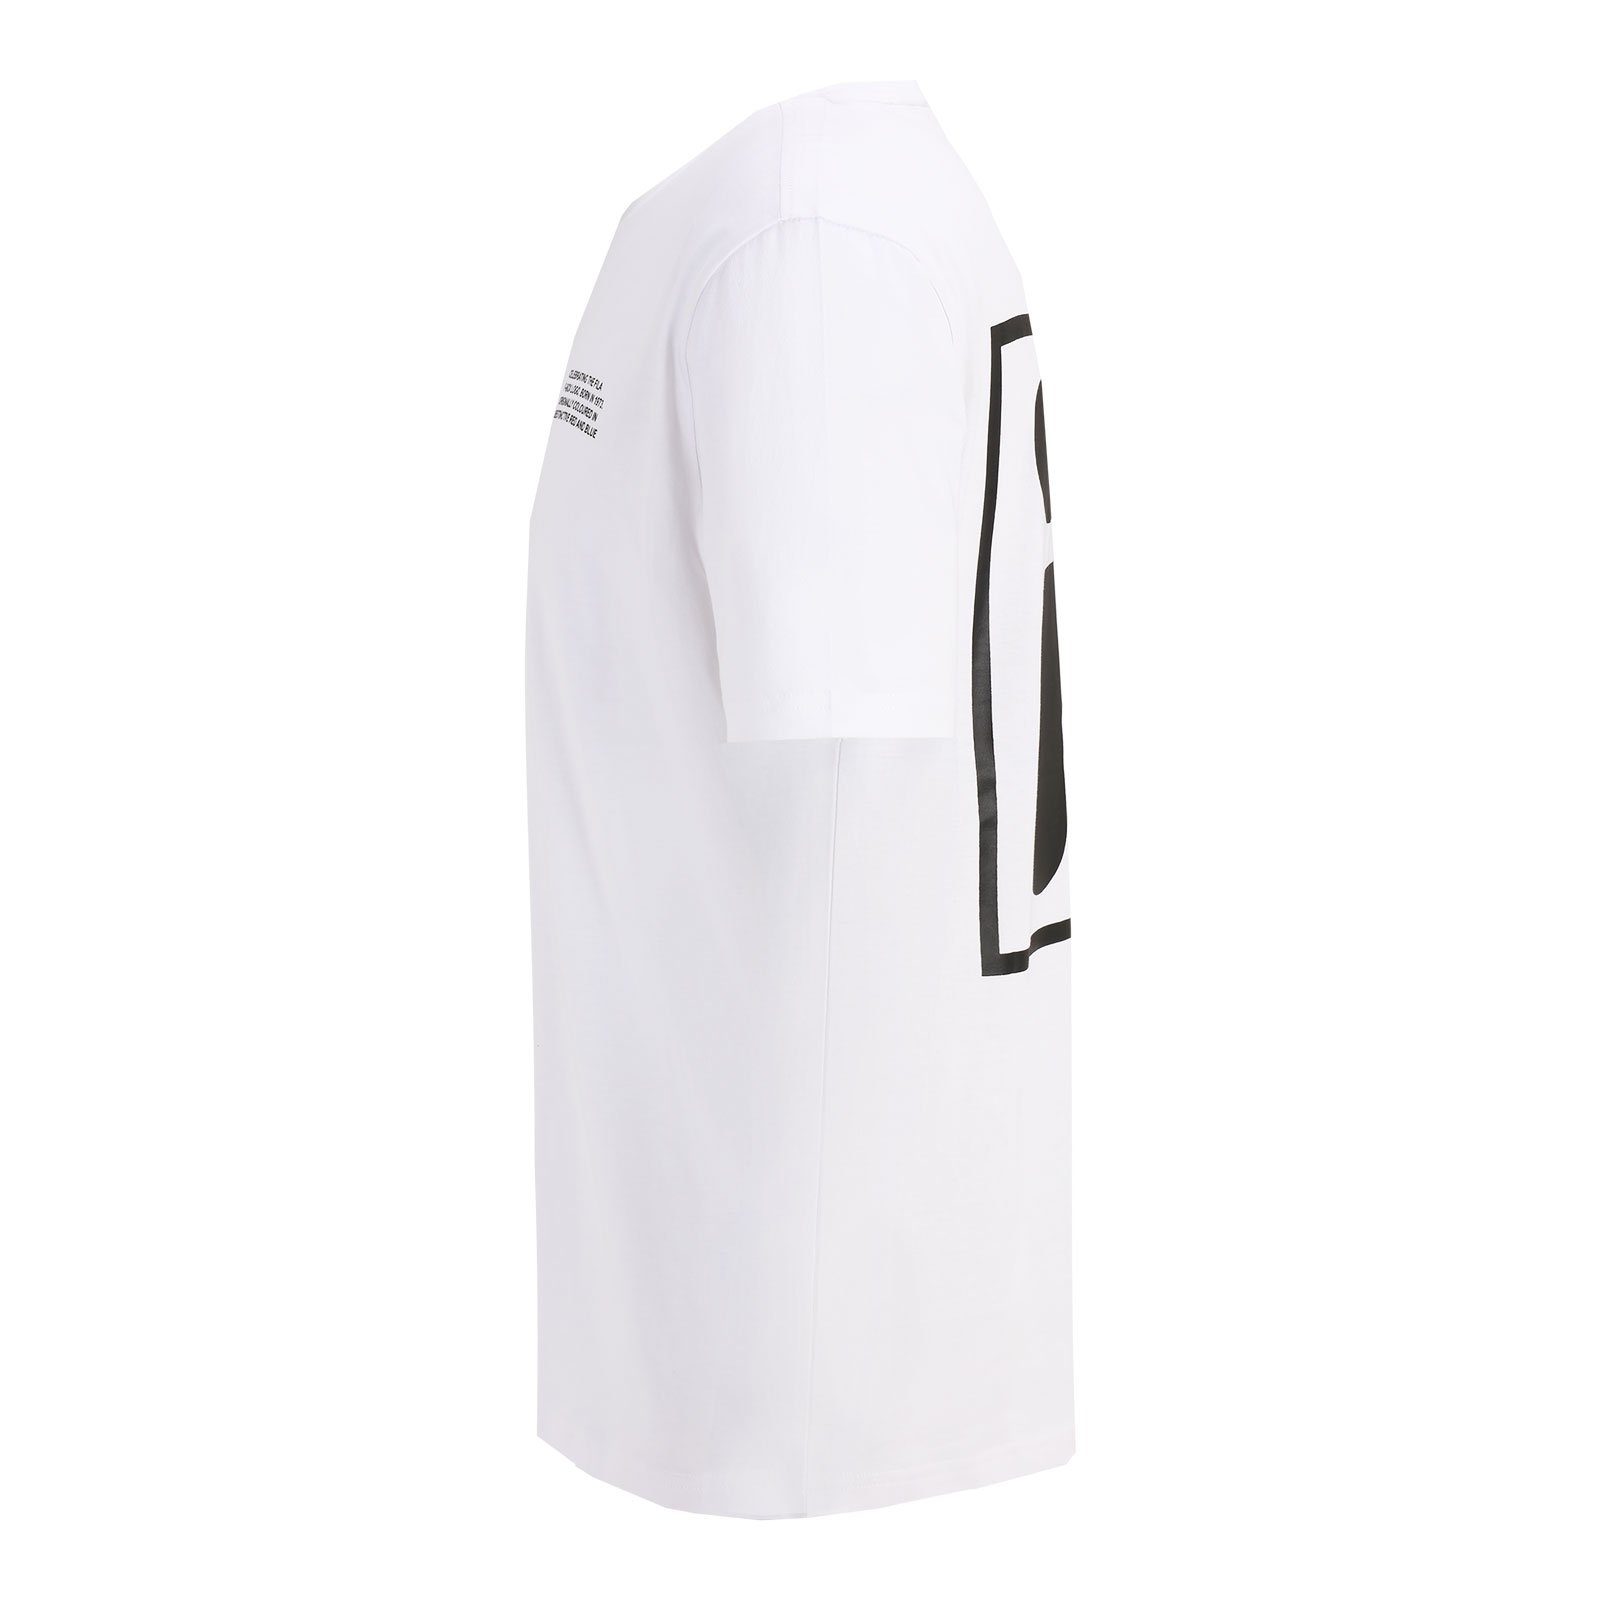 T-Shirt 10001 Borne & auf Print Fila Vorder- Rückseite mit white